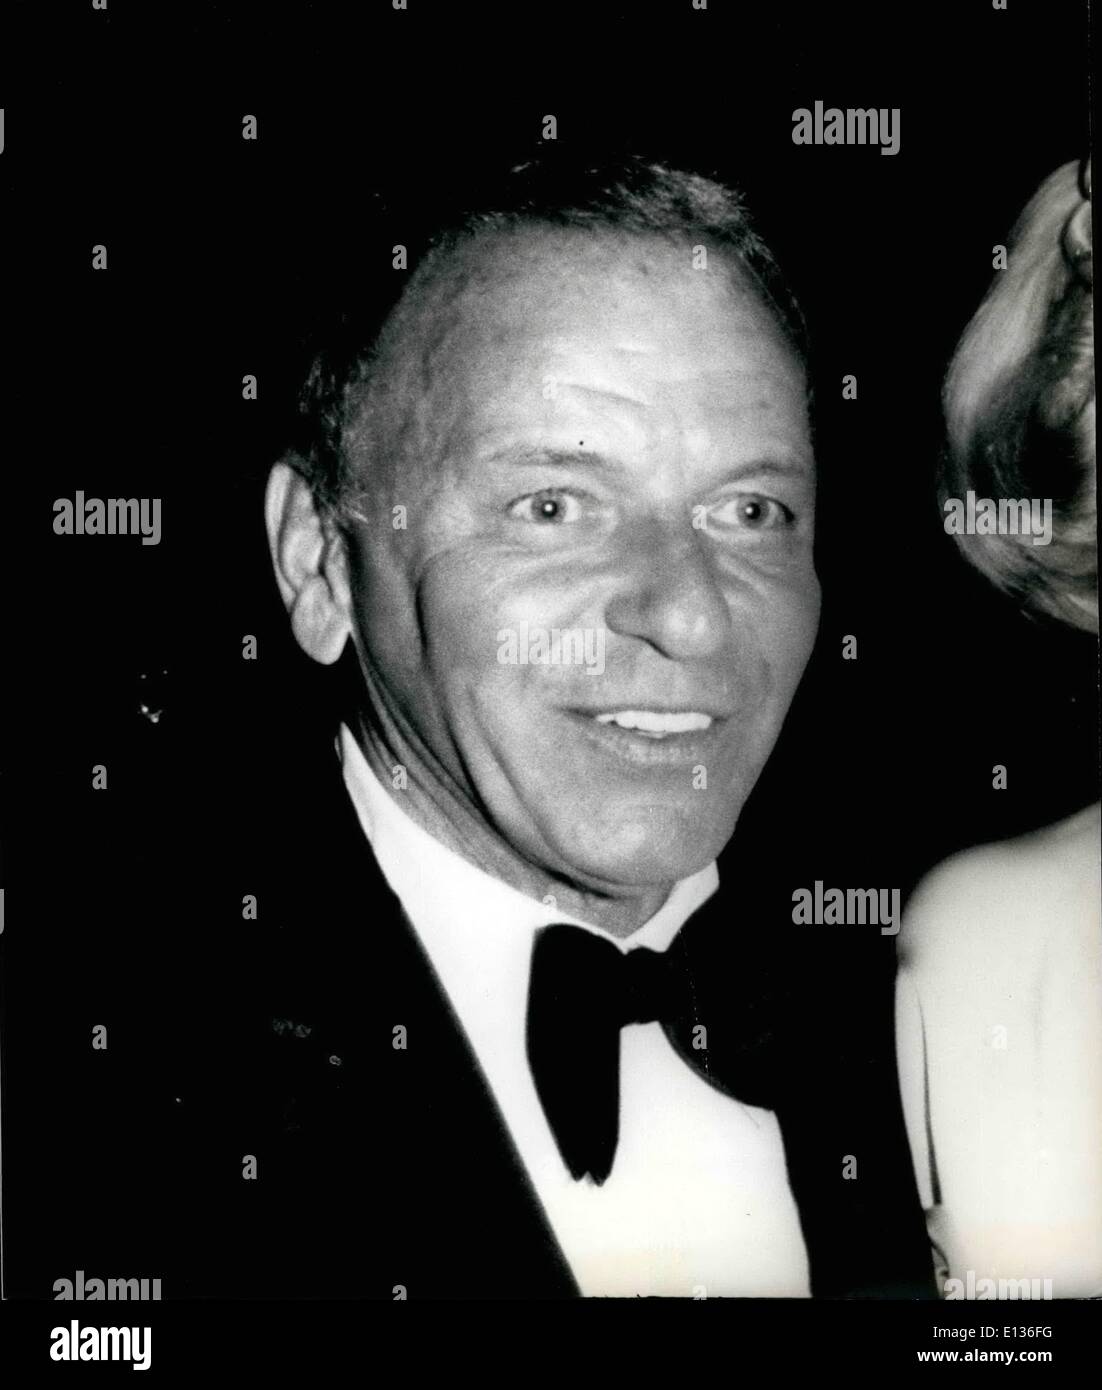 Febrero 28, 2012 - Frank Sinatra-Robert Merrill Función de Gala. Foto de stock